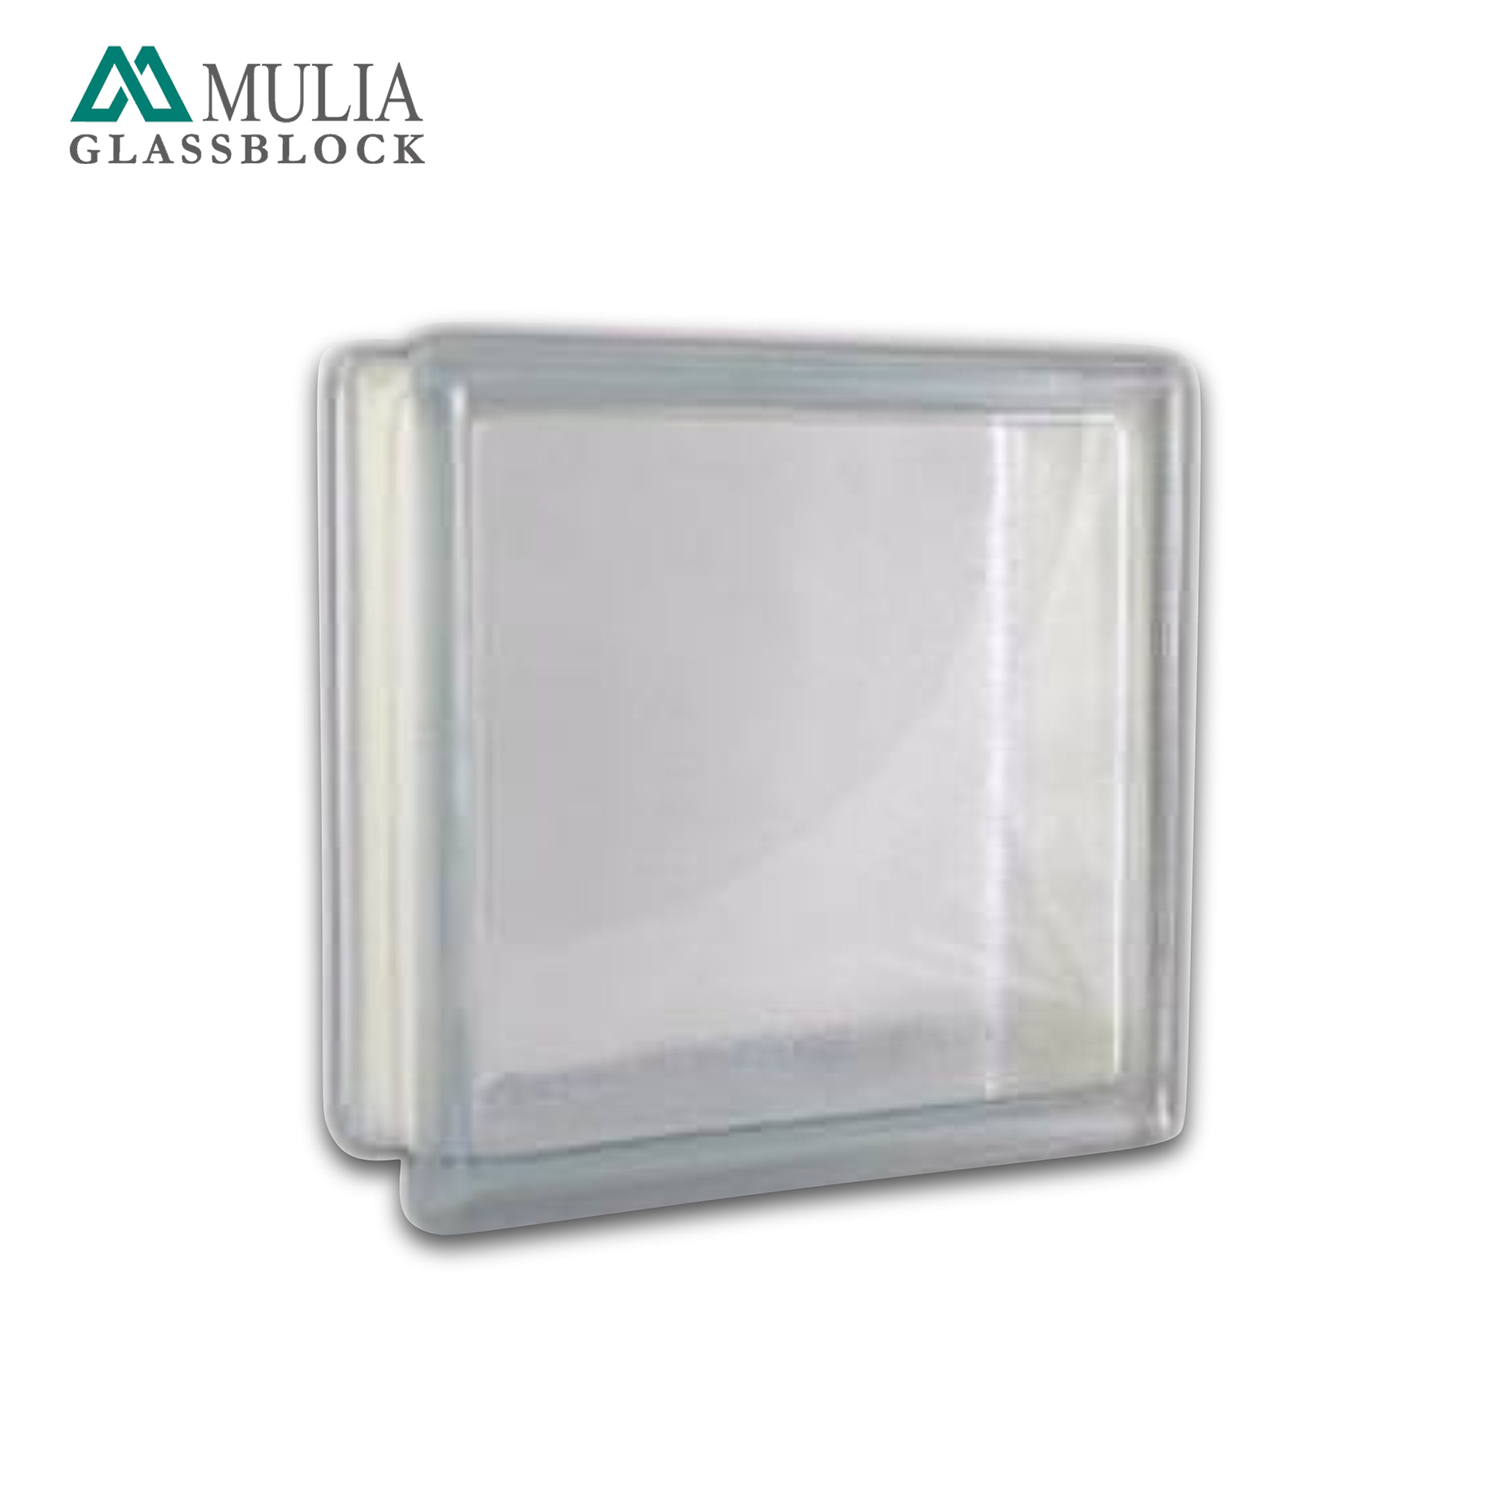 Mulia Glass Block 20X20 Mist - Balok Kaca